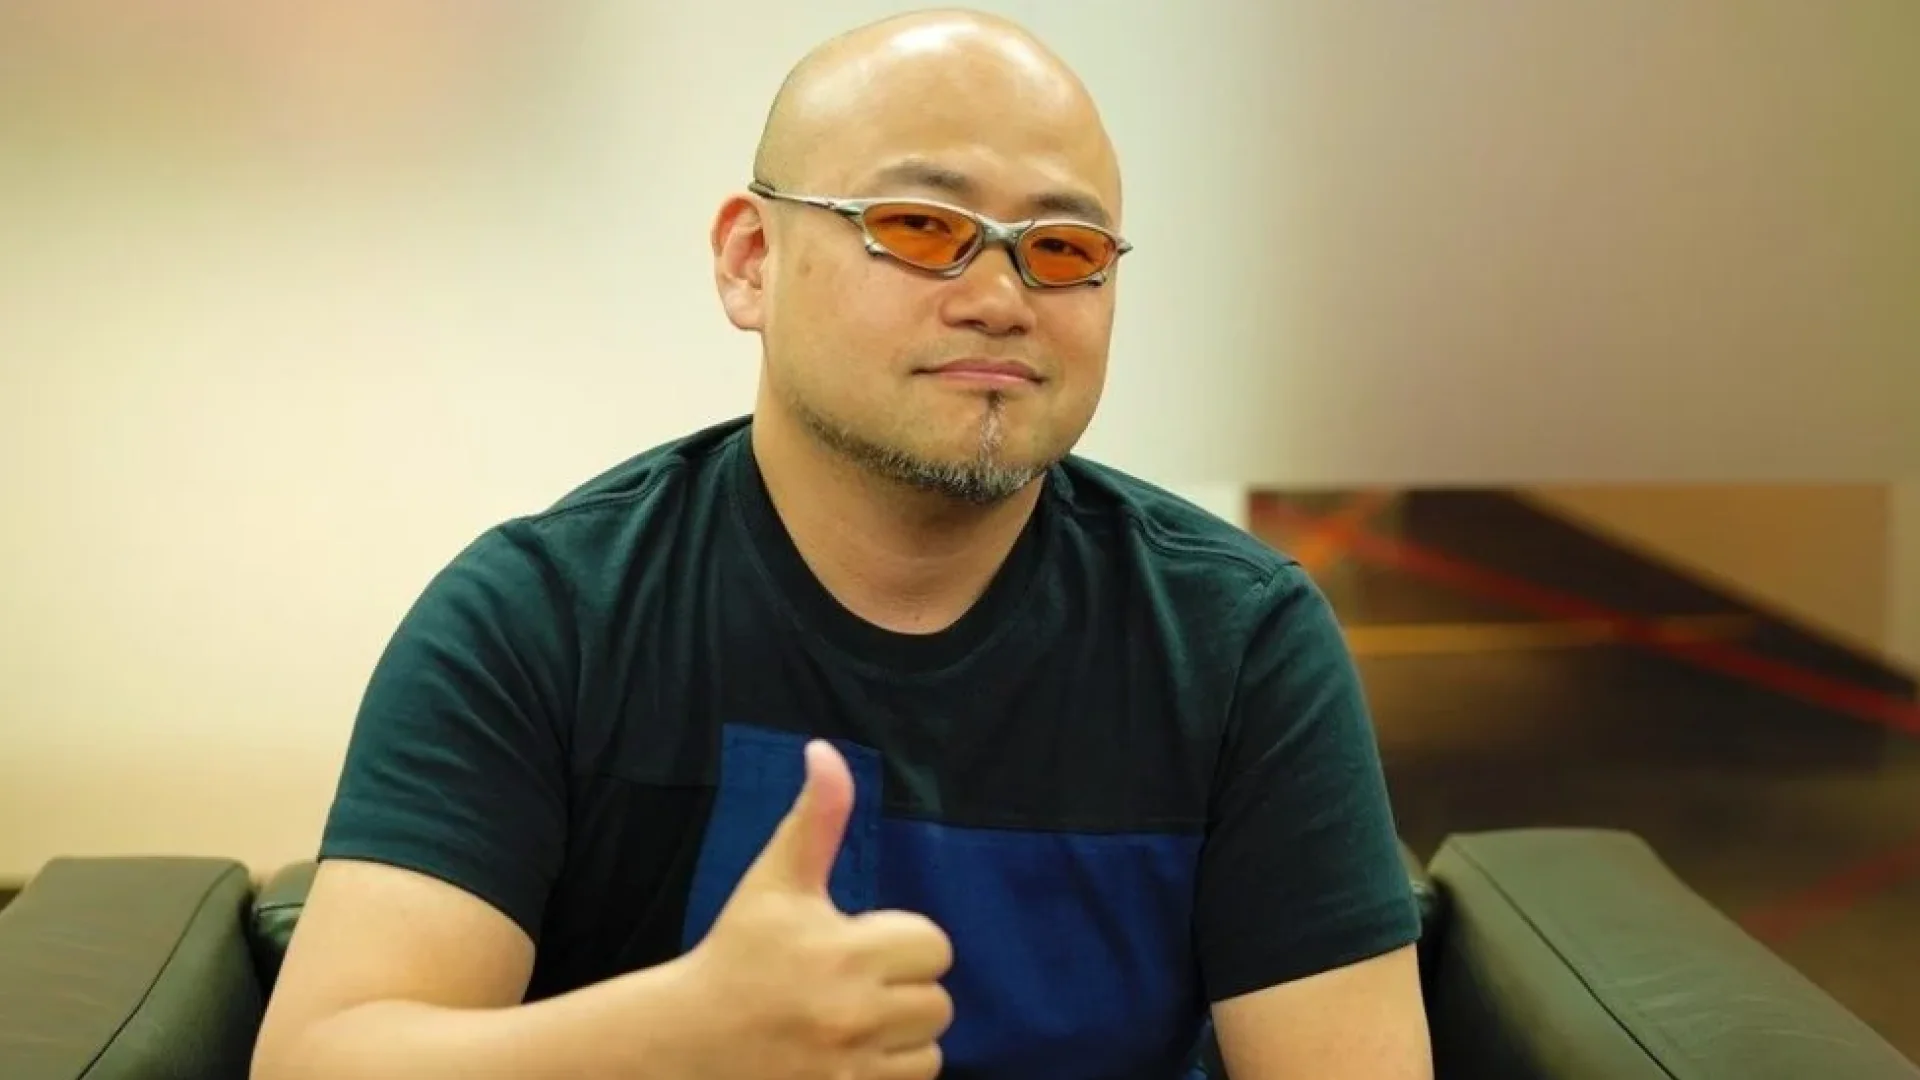 Bayonetta-skaberen Hideki Kamiya har oprettet sin egen YouTube-kanal efter at have forladt PlatinumGames